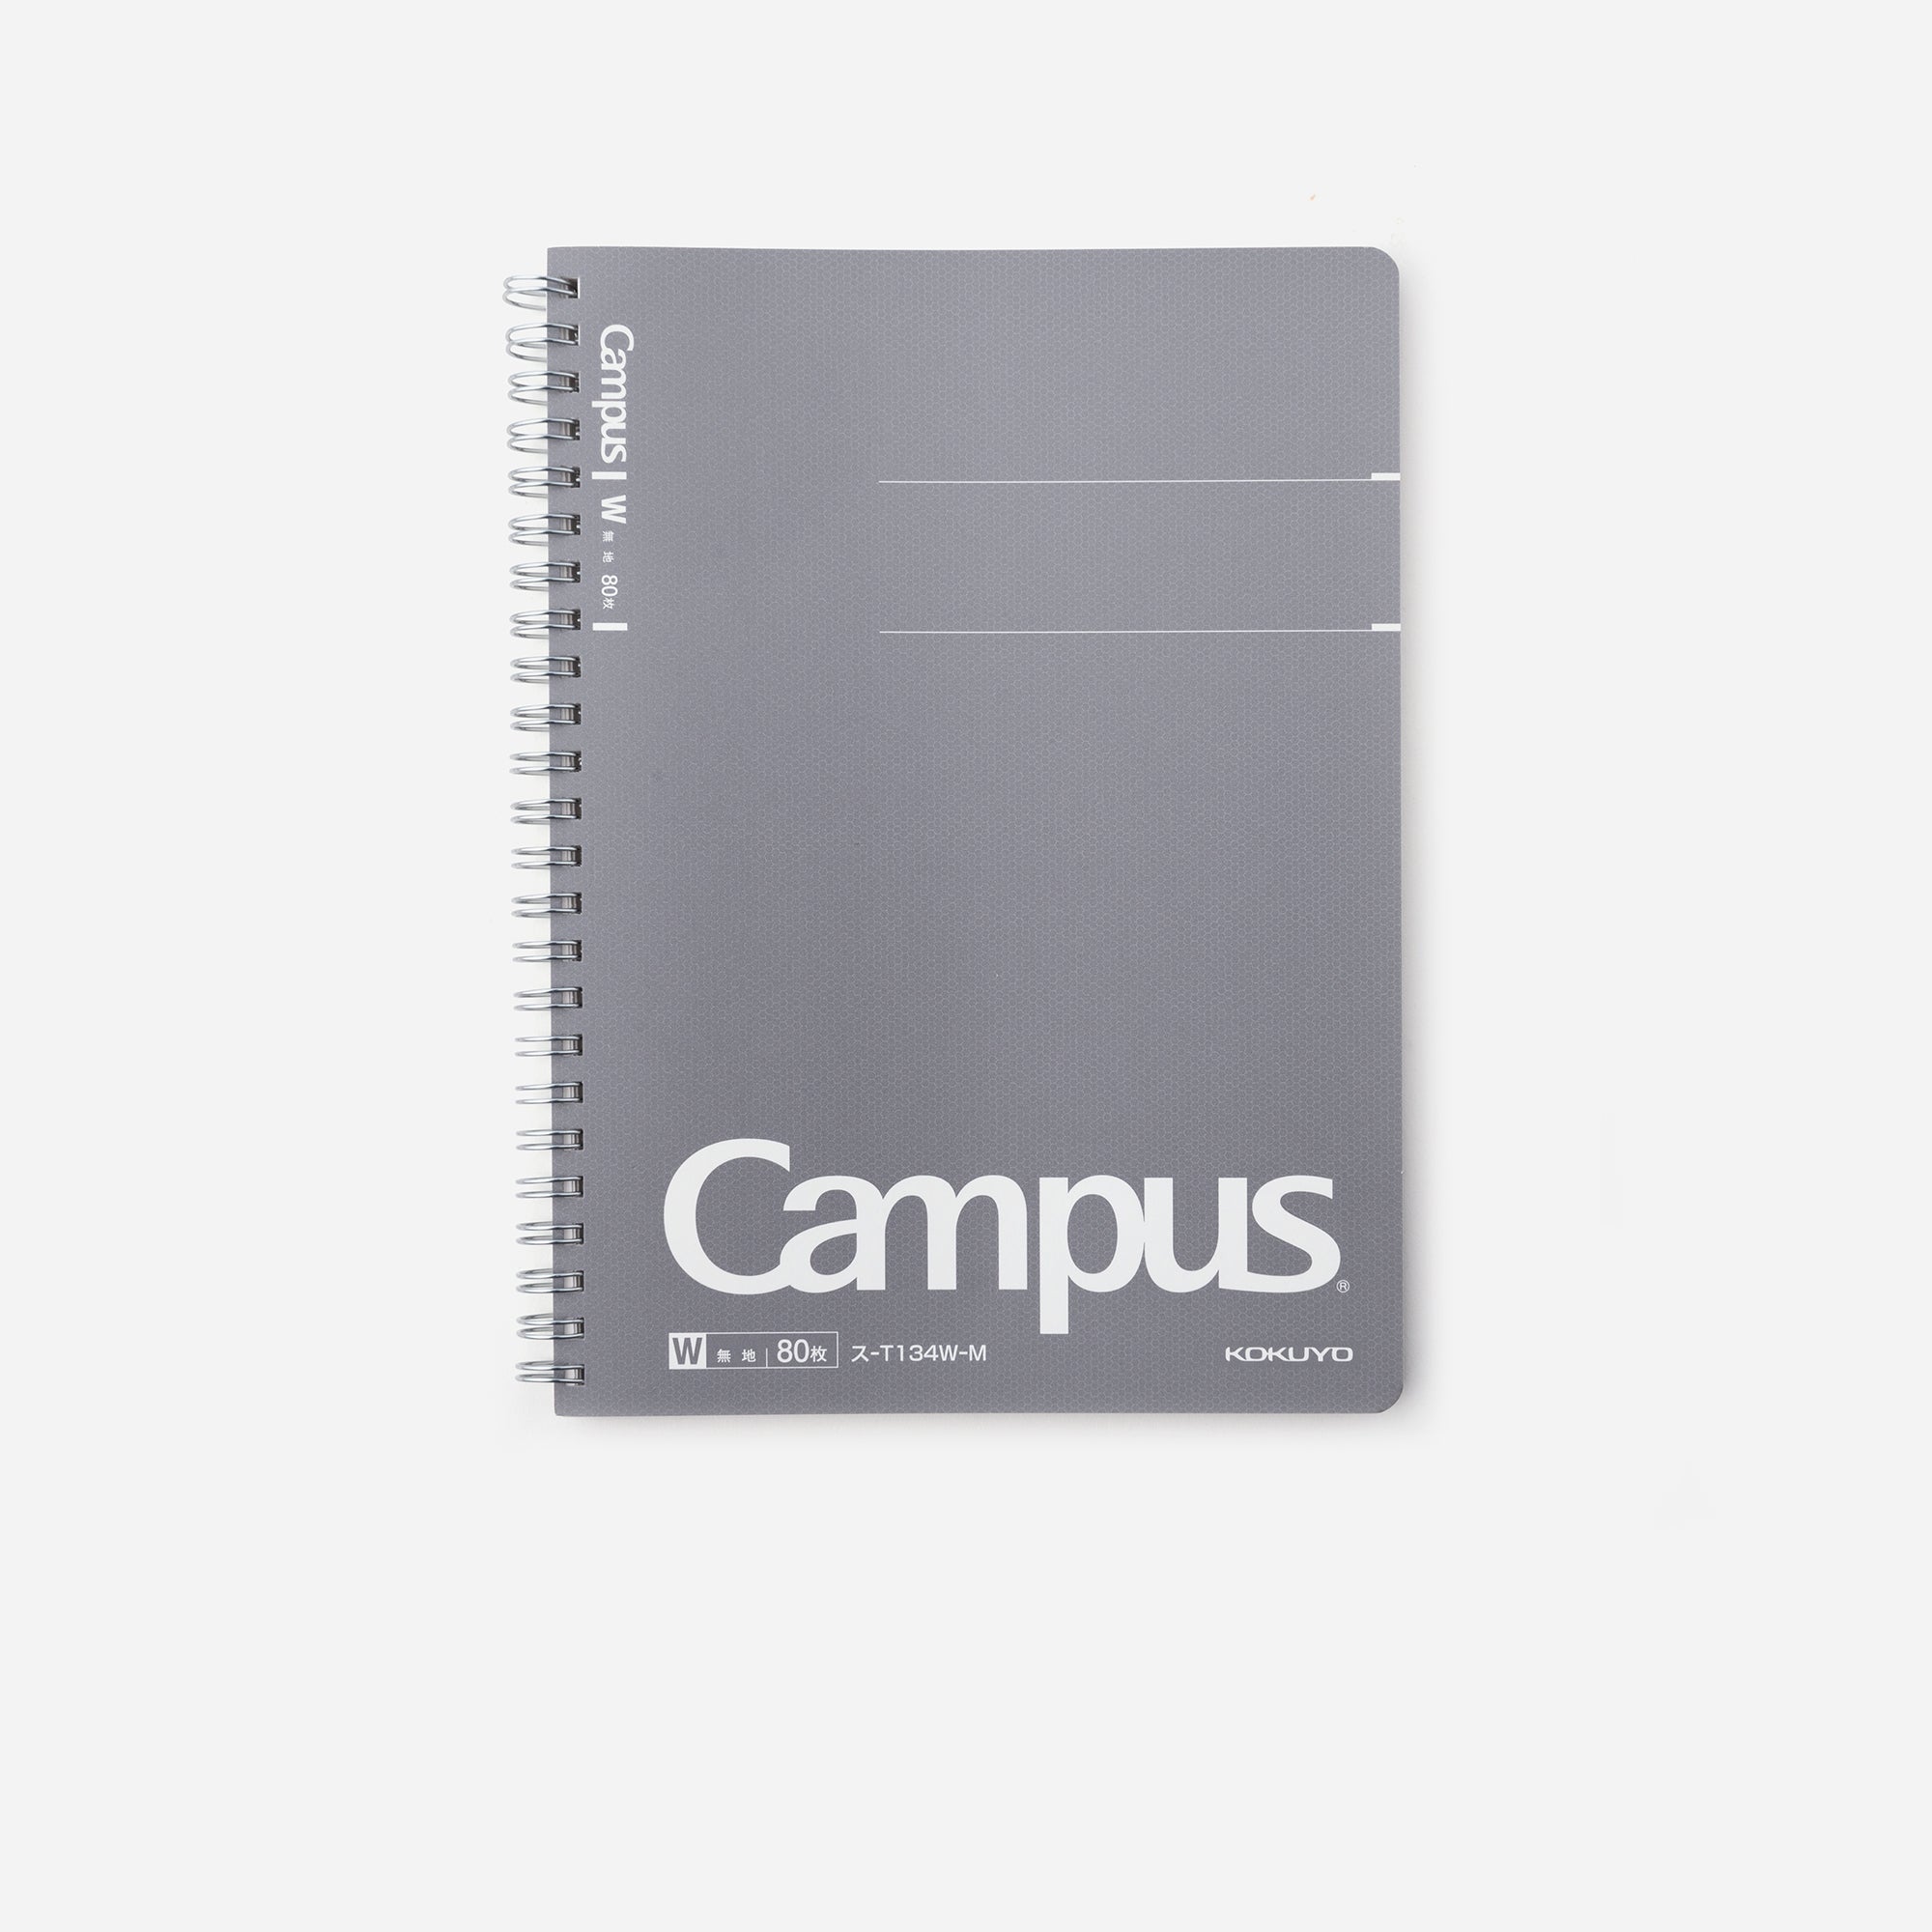 Campus notebook